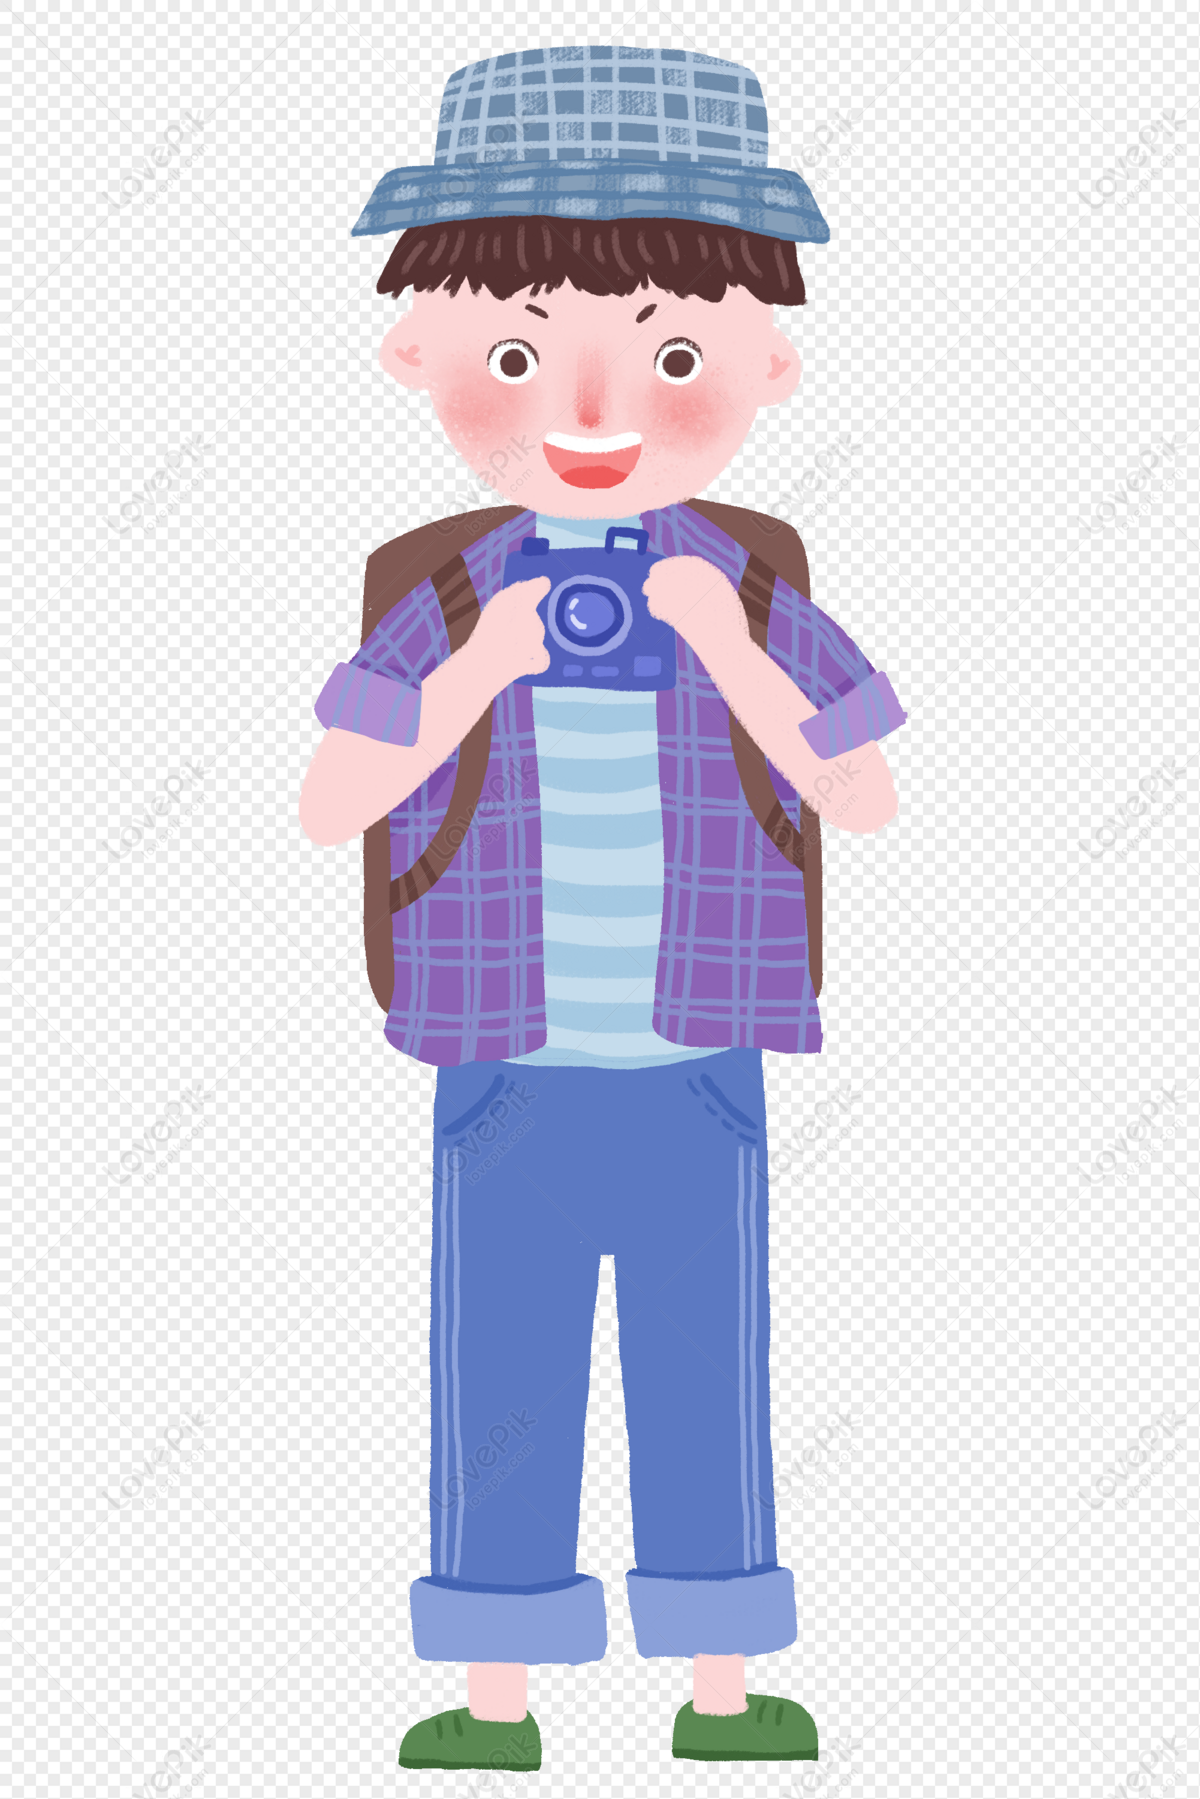 Boy on the National Day travel bag, national day, travel, lumberjack jacket png image